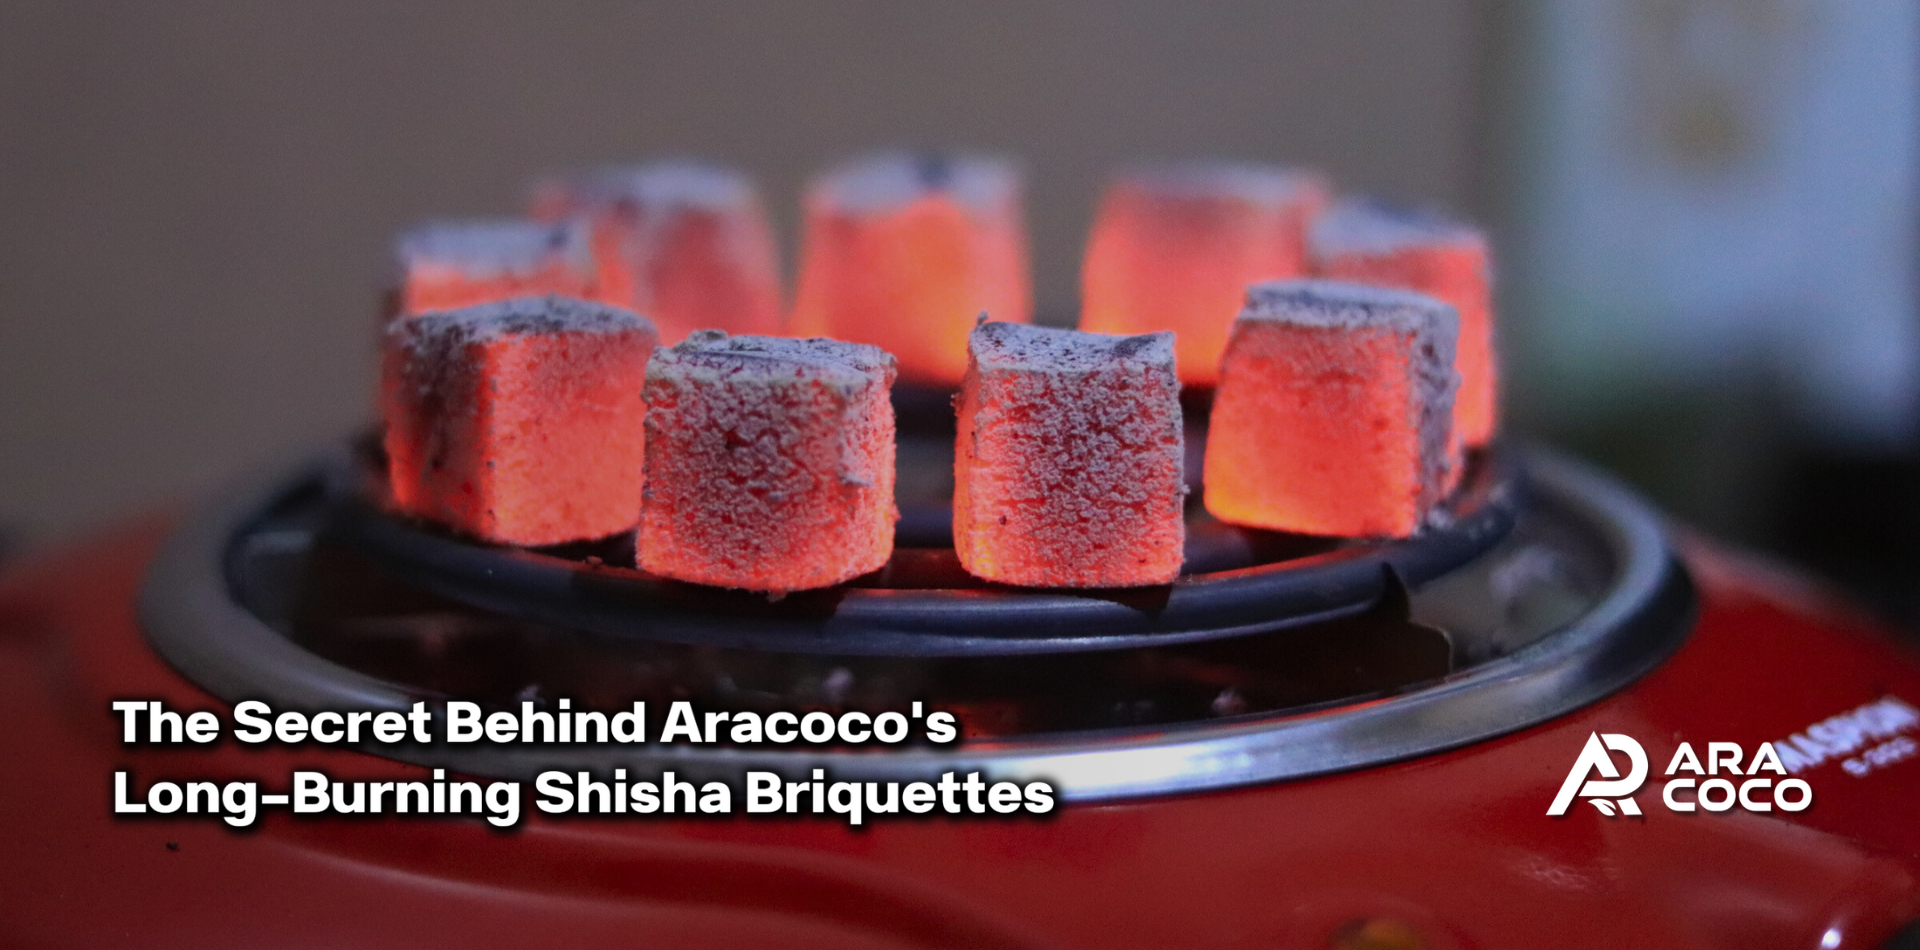 The Secret Behind Aracoco's Long-Burning Shisha Briquettes